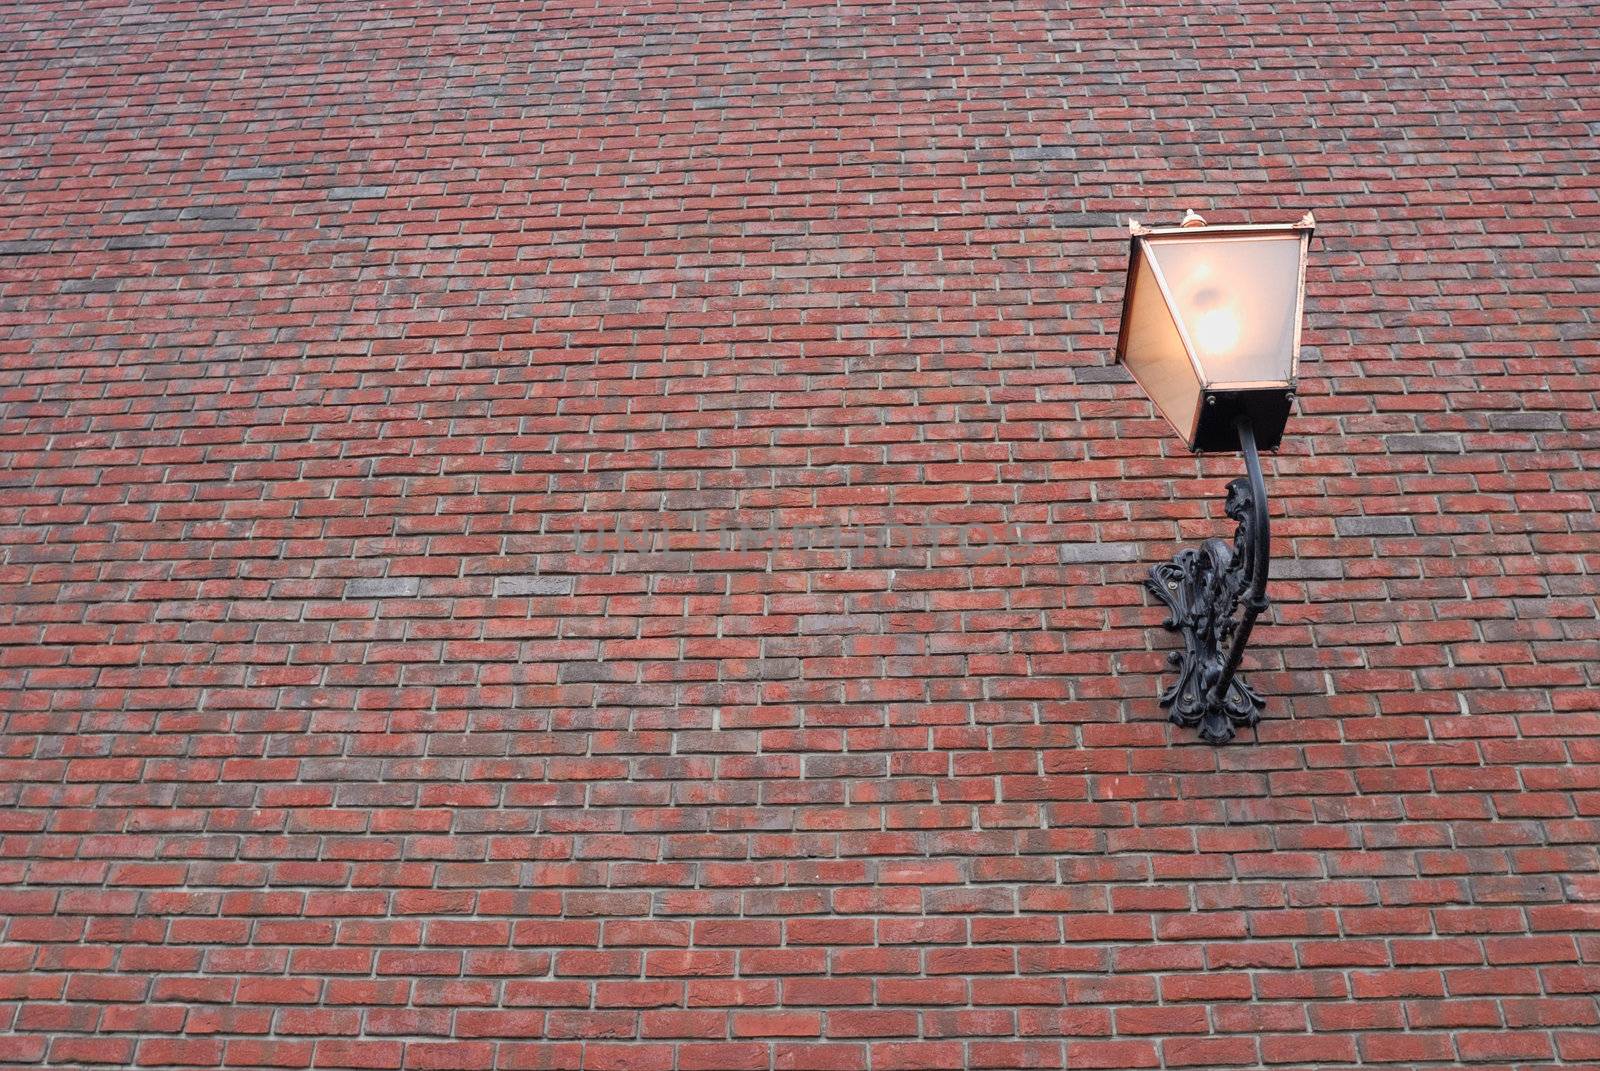 Brick wall with lantern